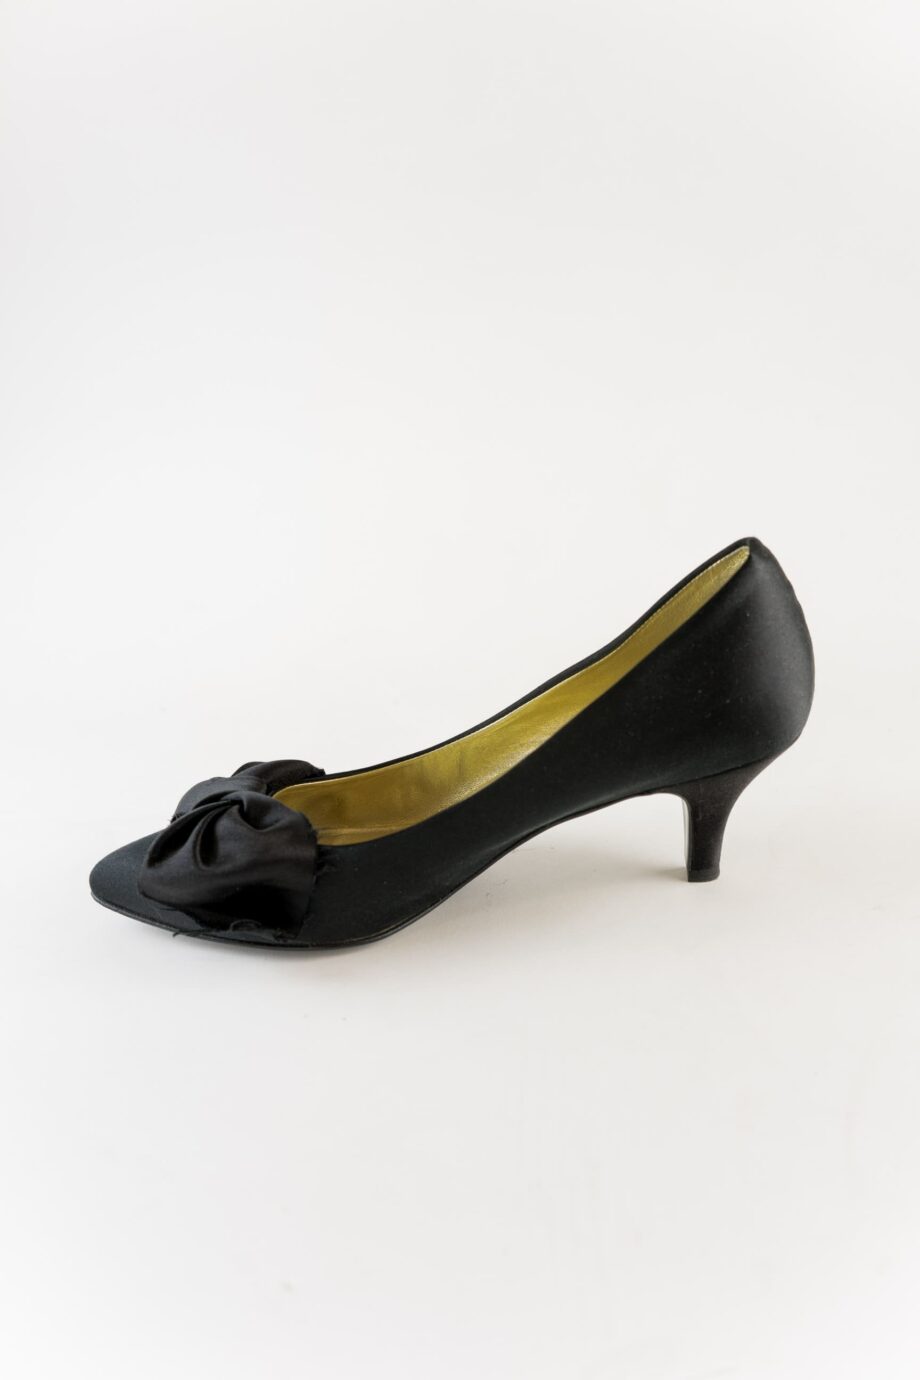 Pre-Loved black Chanel heels side